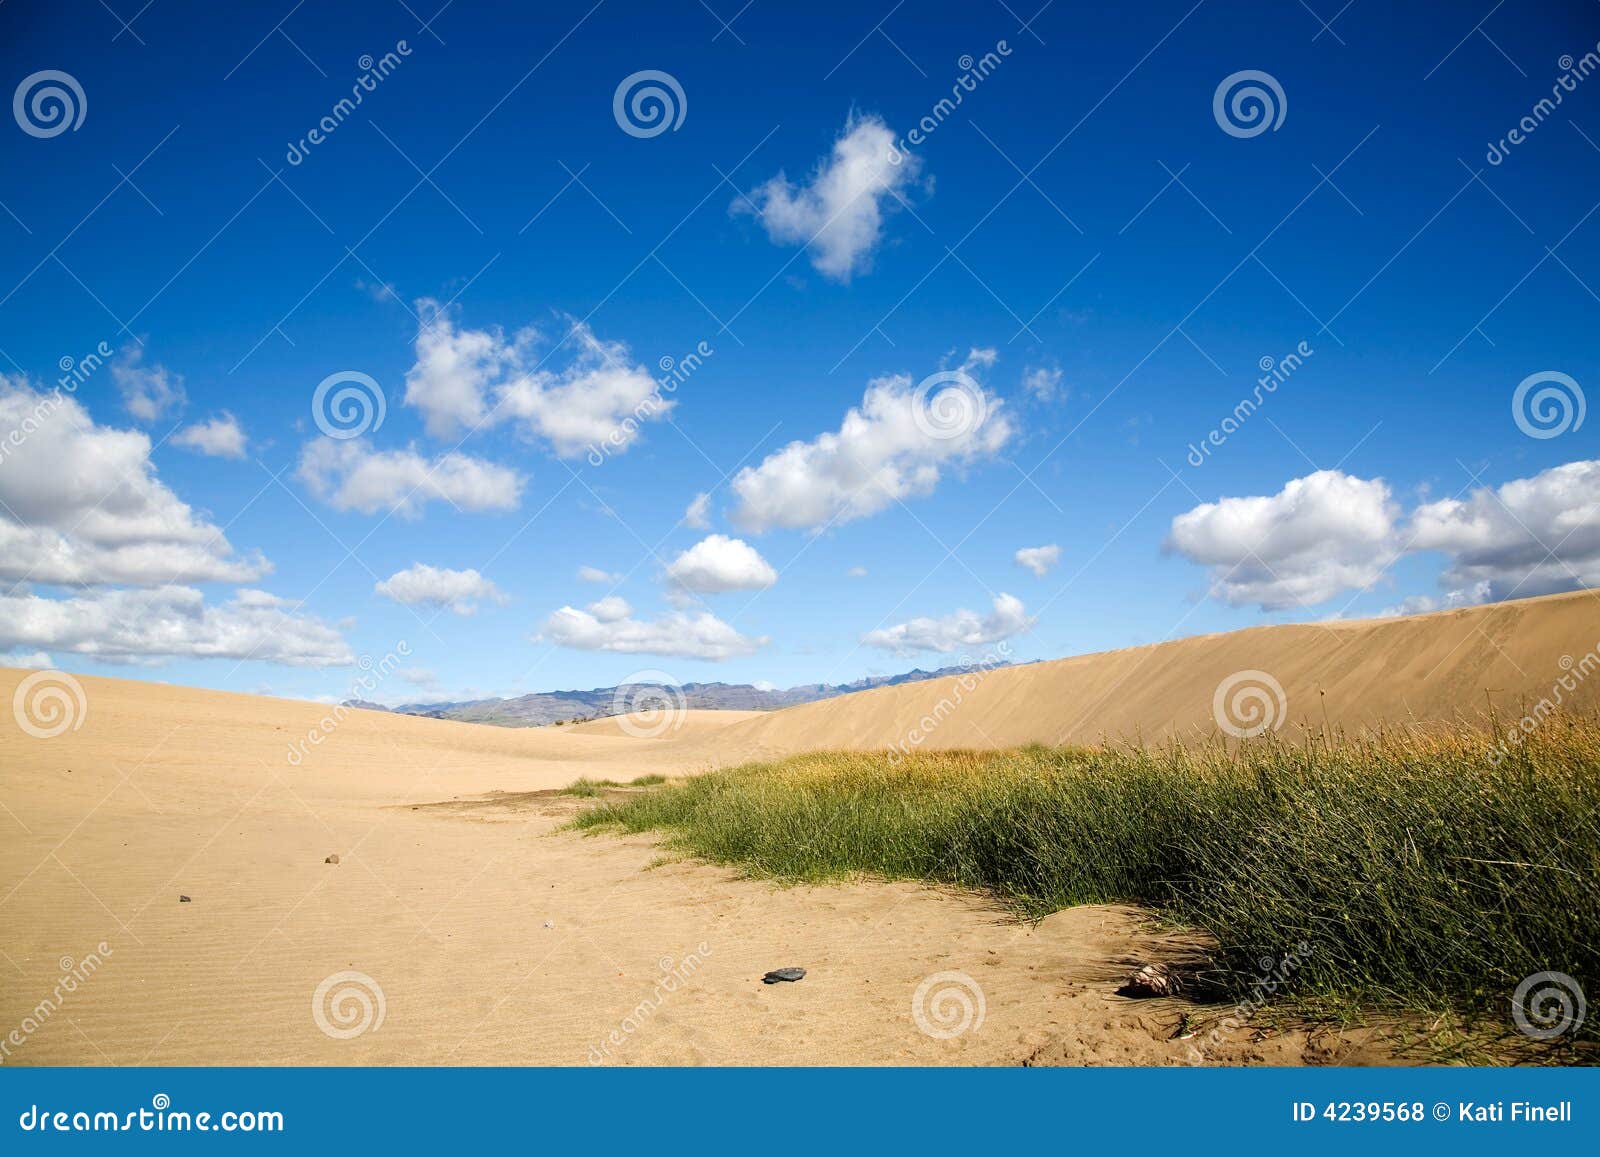 maspalomas sand dunes